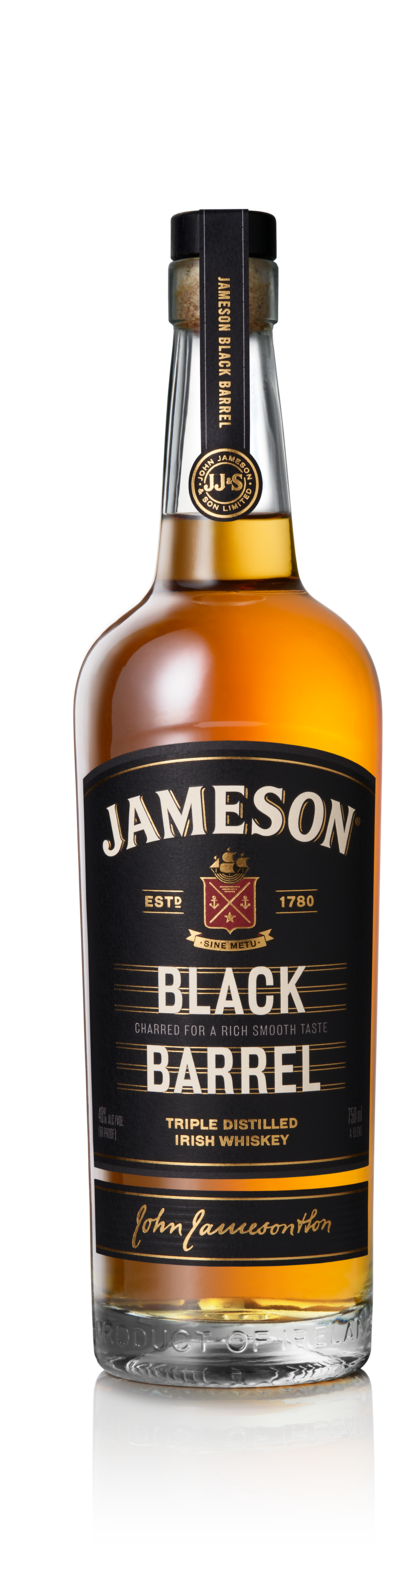 previewlarge jameson black barrel packshot 750ml print res white background with sbc aspect ratio 0.26 1